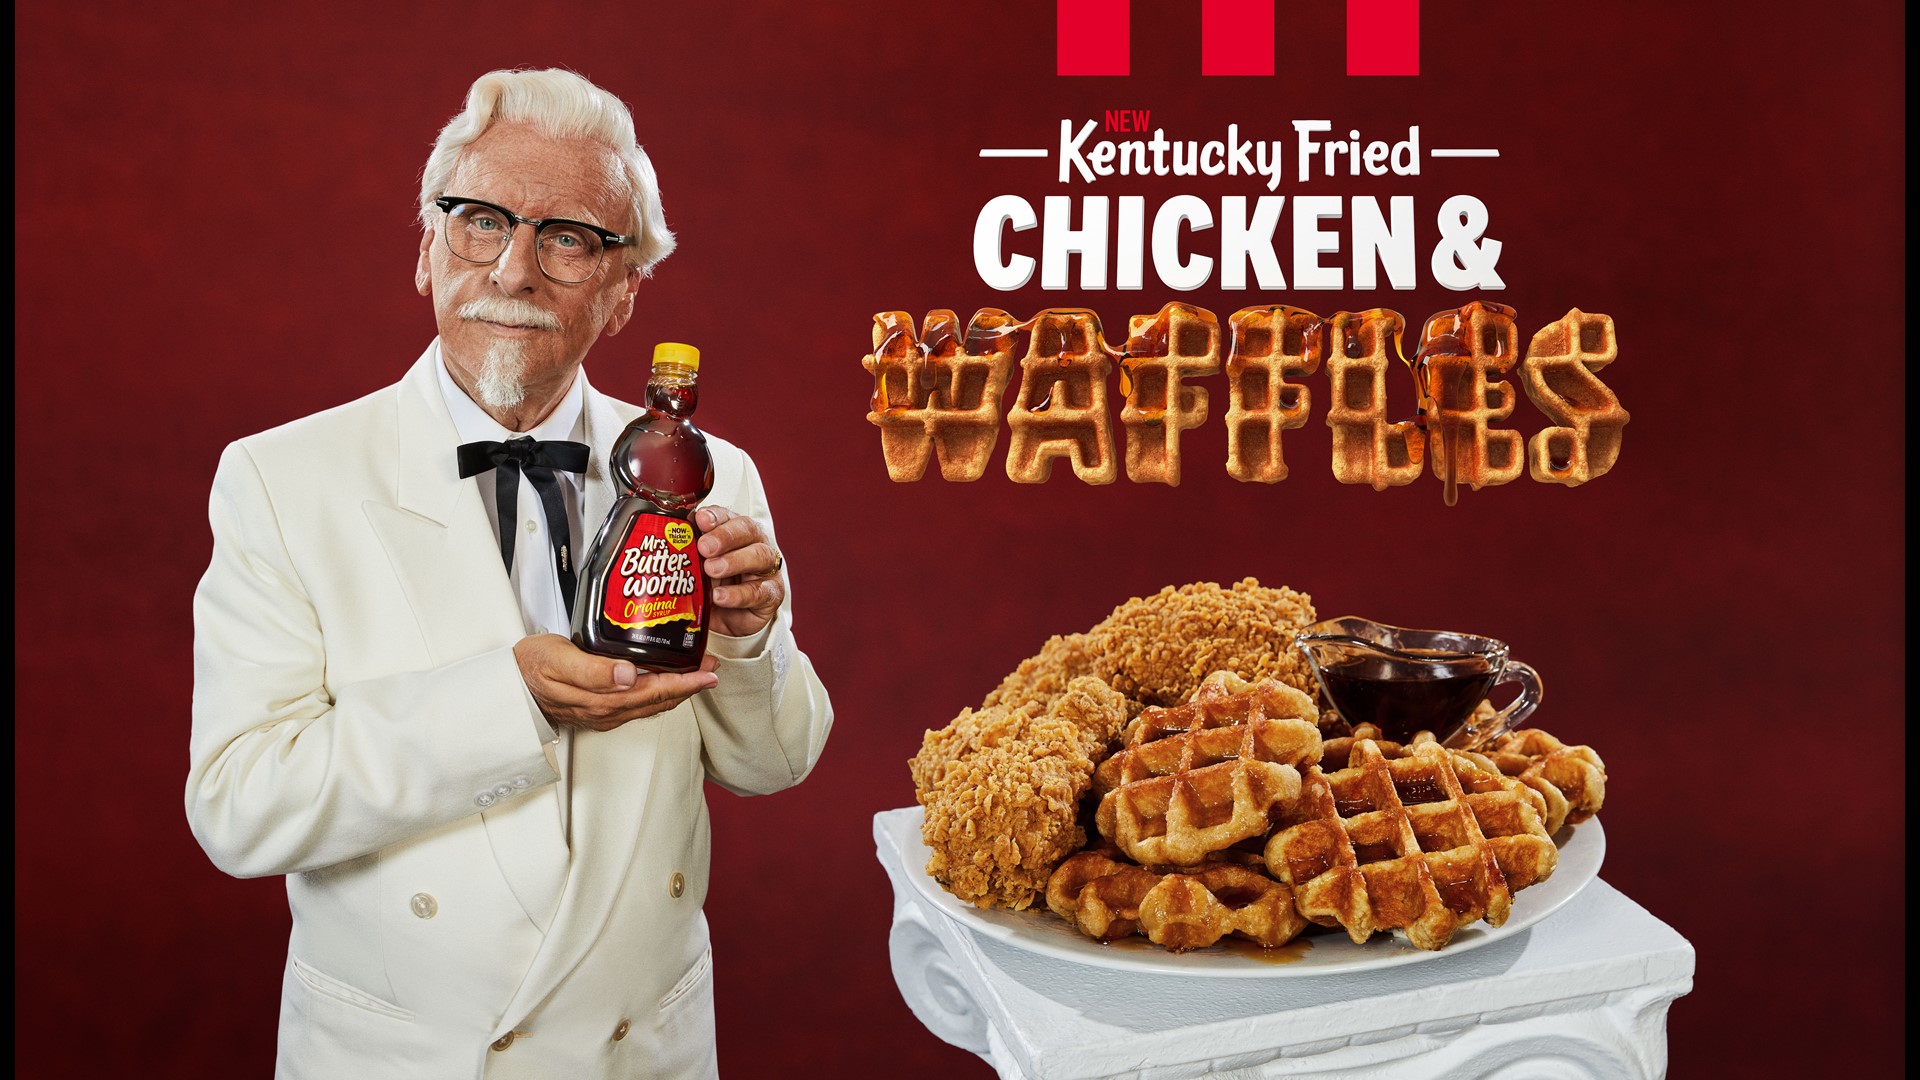 KFC's newest offering Chicken & Waffles